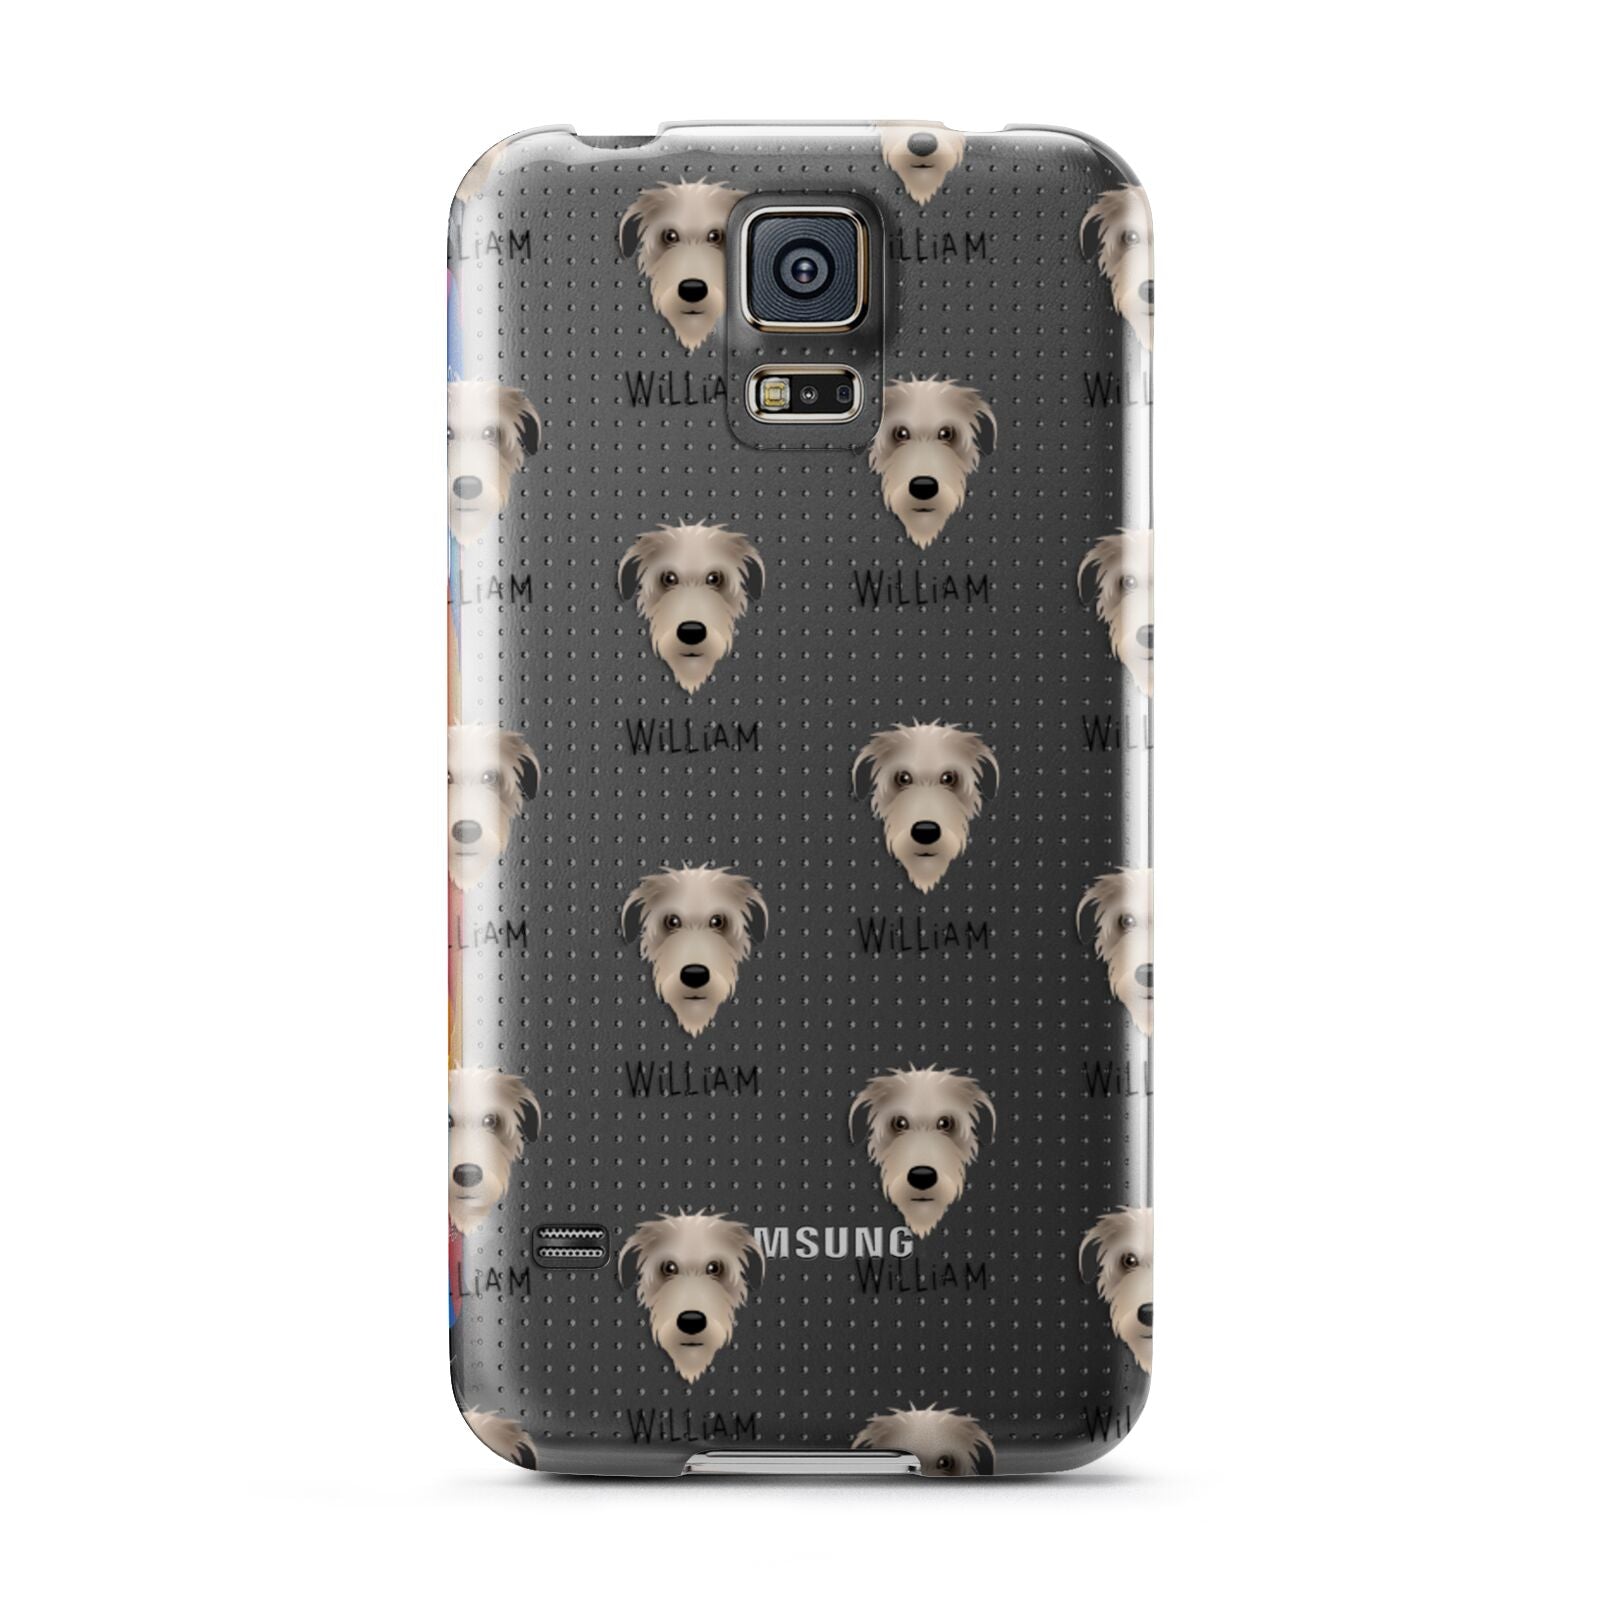 Deerhound Icon with Name Samsung Galaxy S5 Case